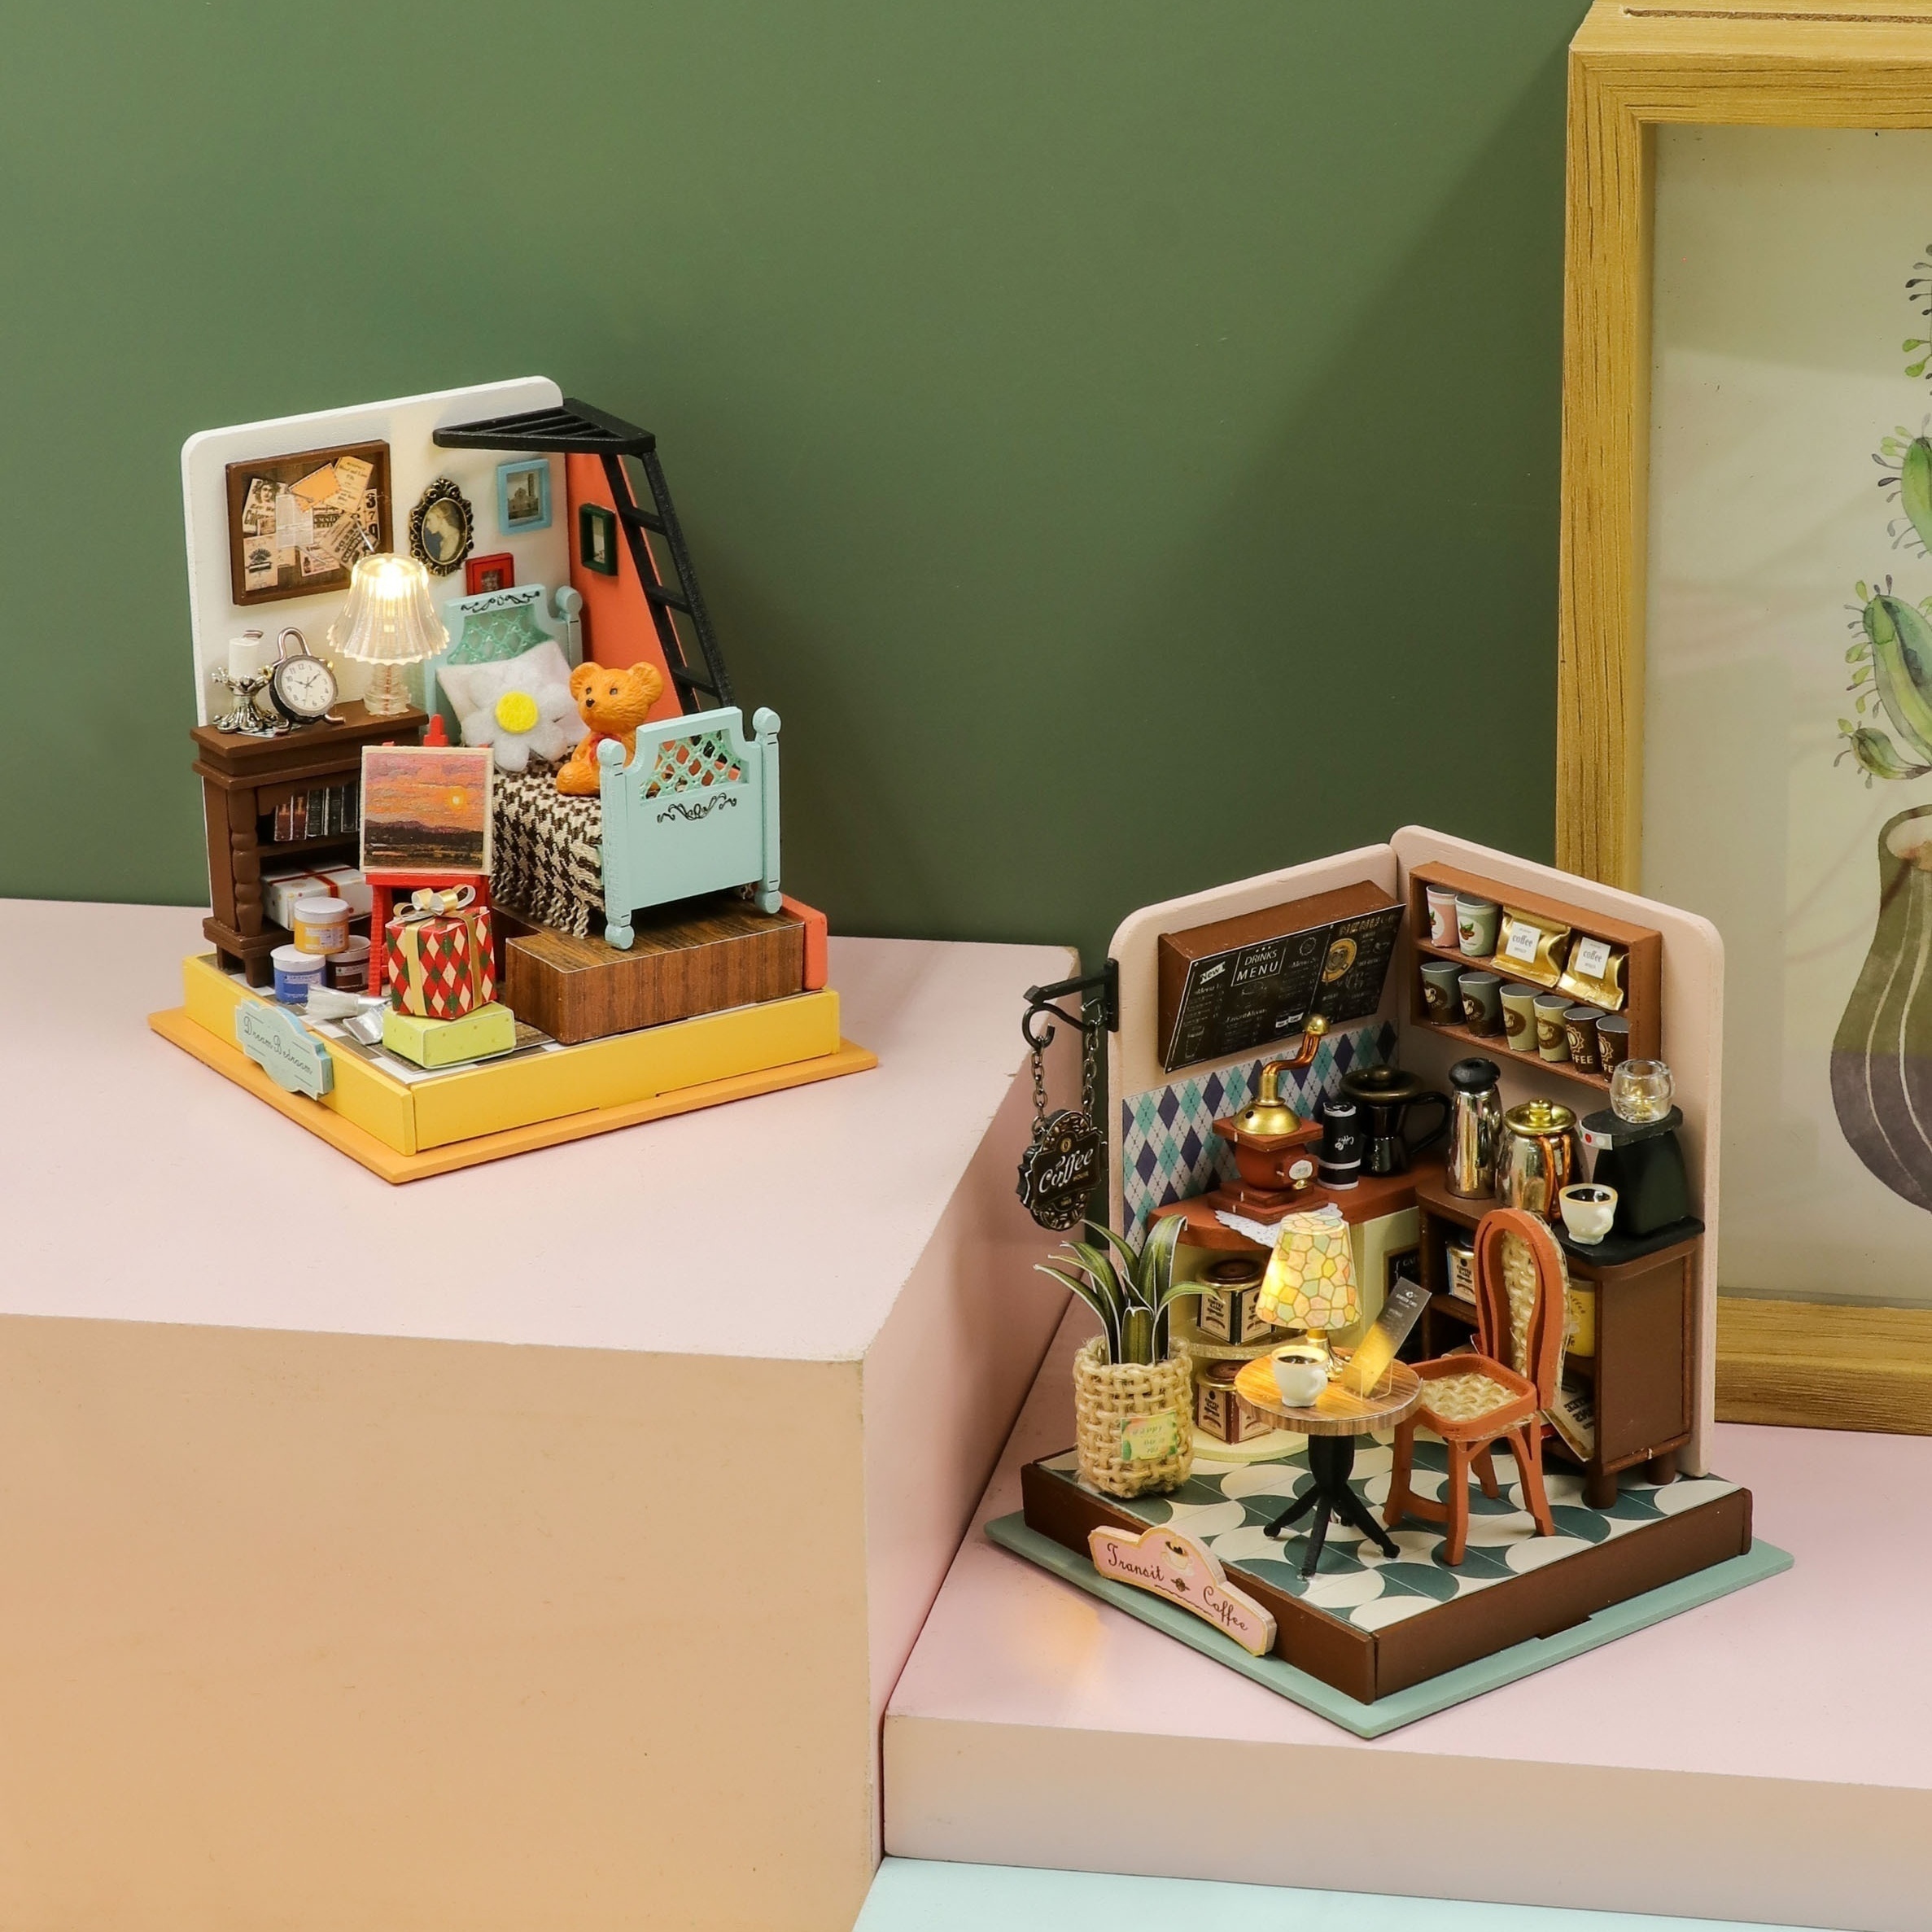  ROBOTIME Dollhouse Kit Miniature DIY Library House